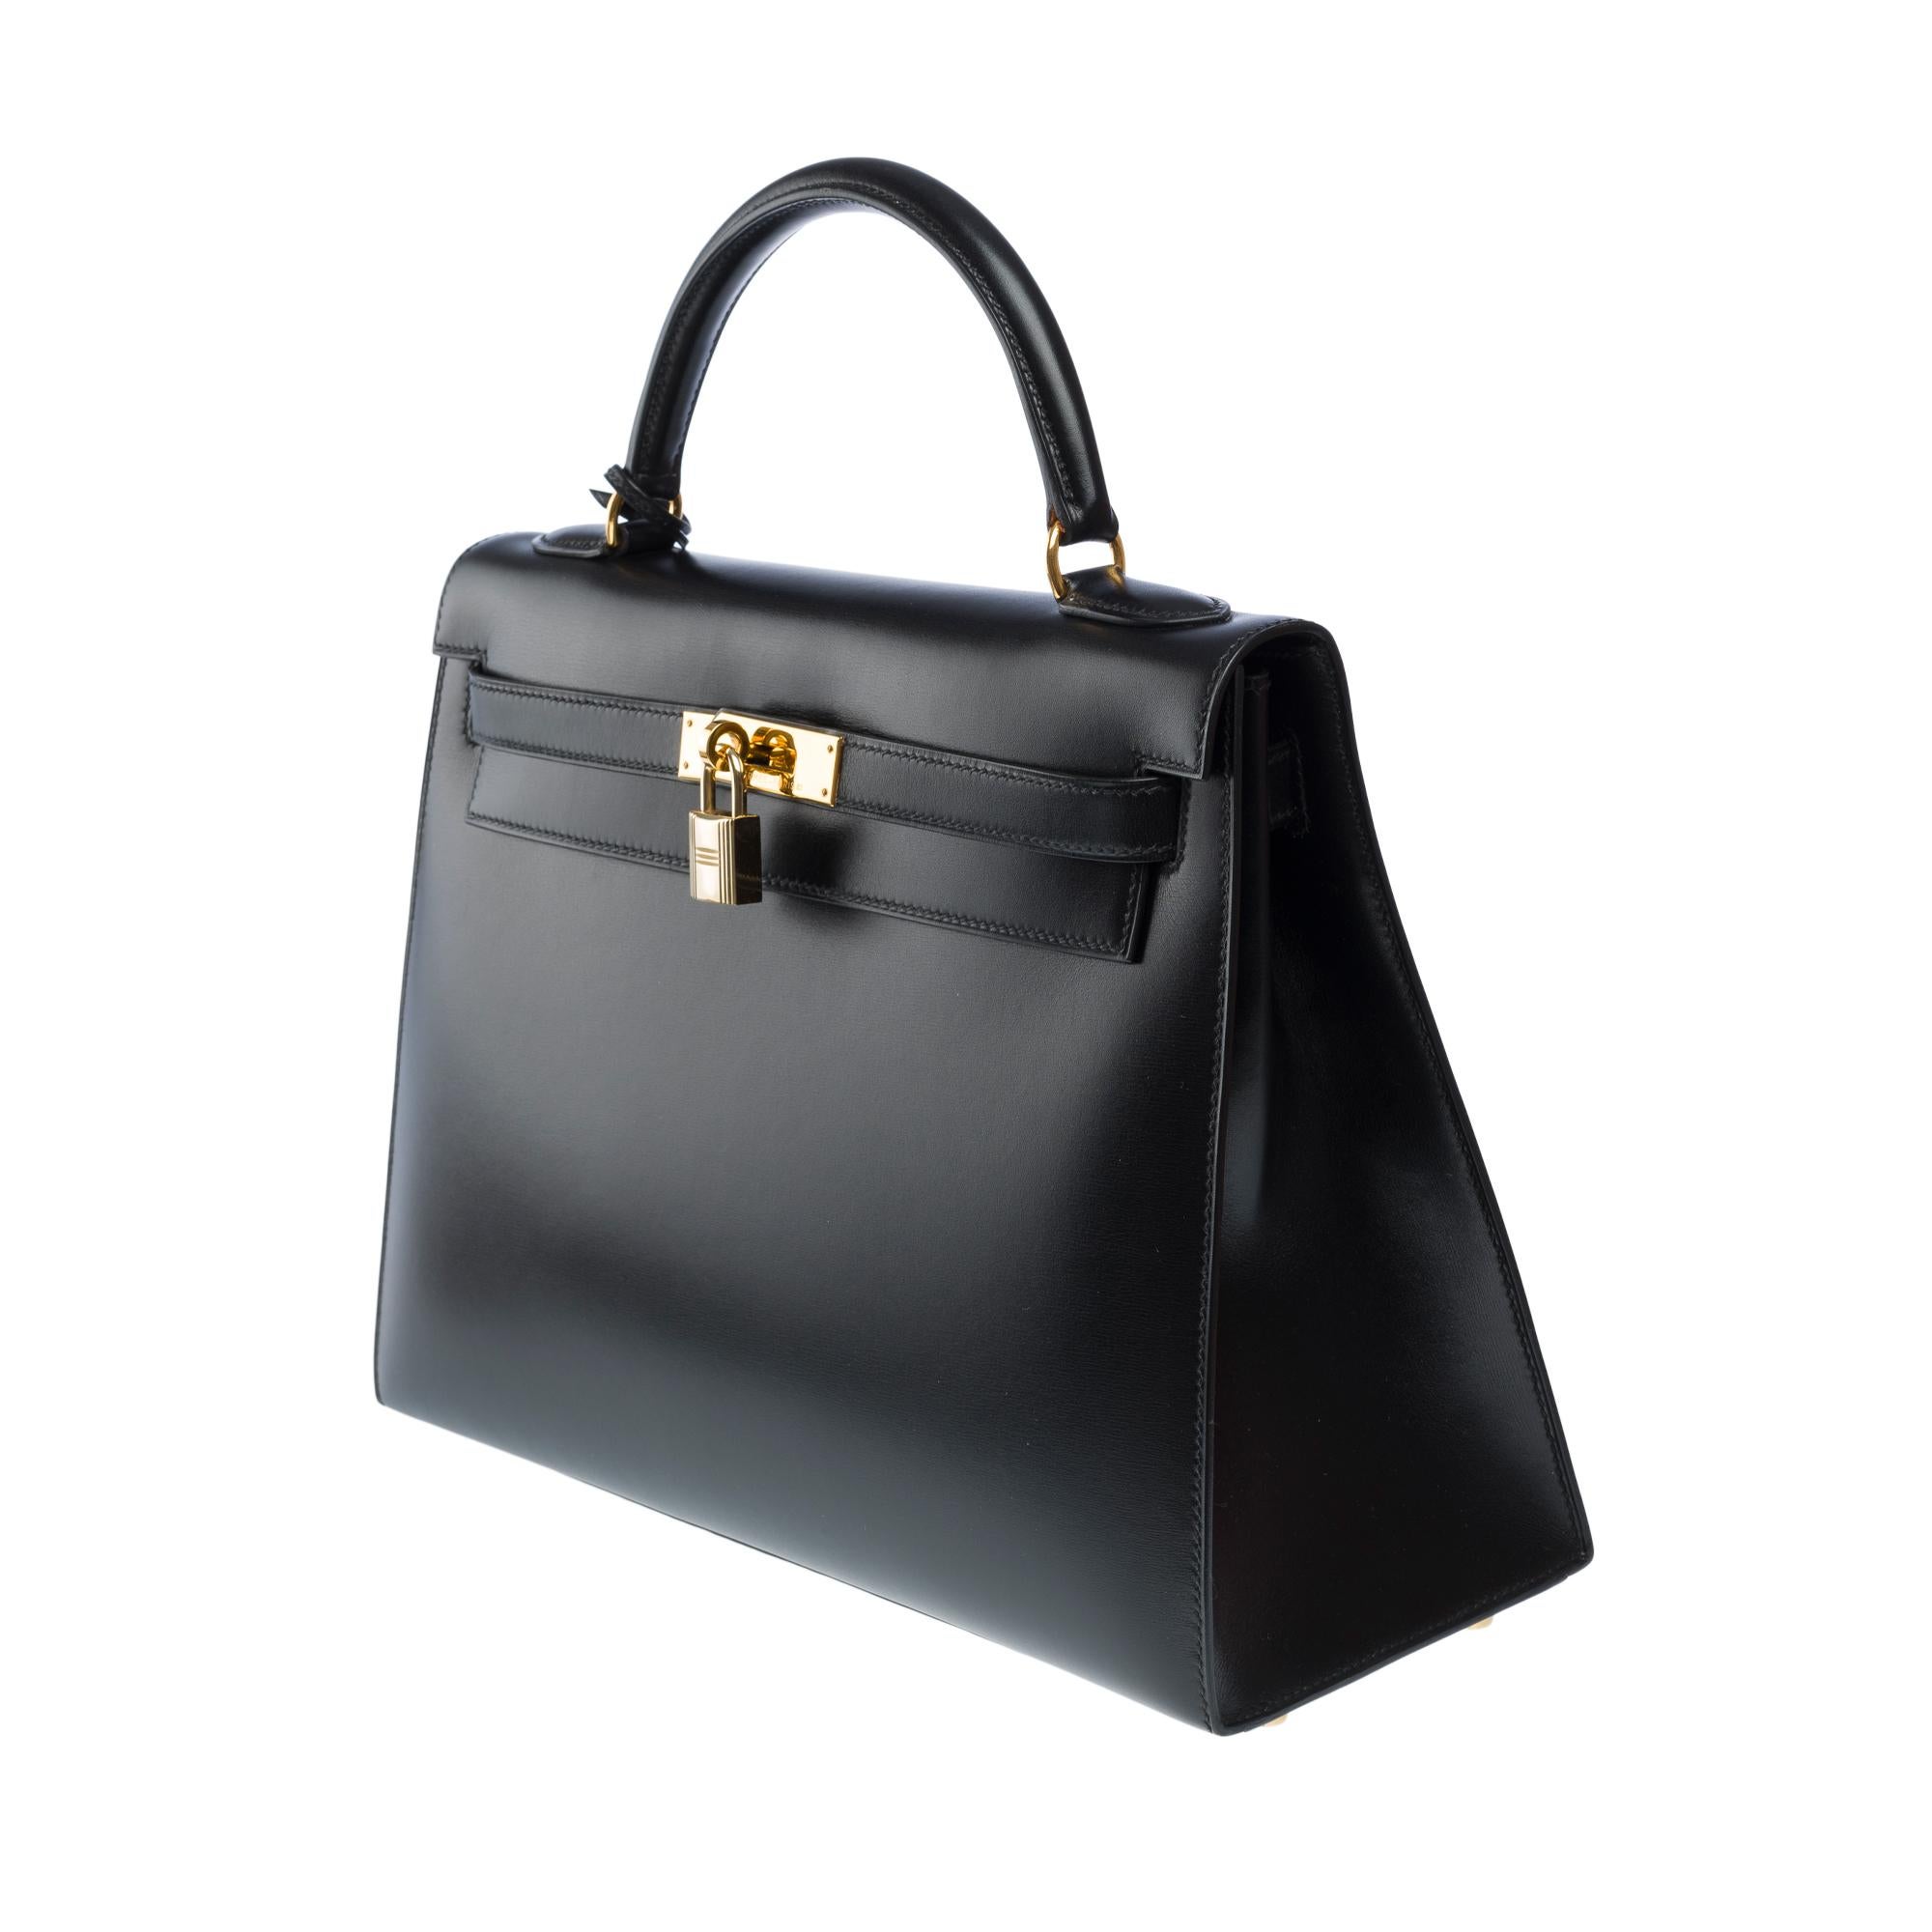 Stunning Hermès Kelly 32 sellier handbag strap in Black Box Calf leather, GHW For Sale 1